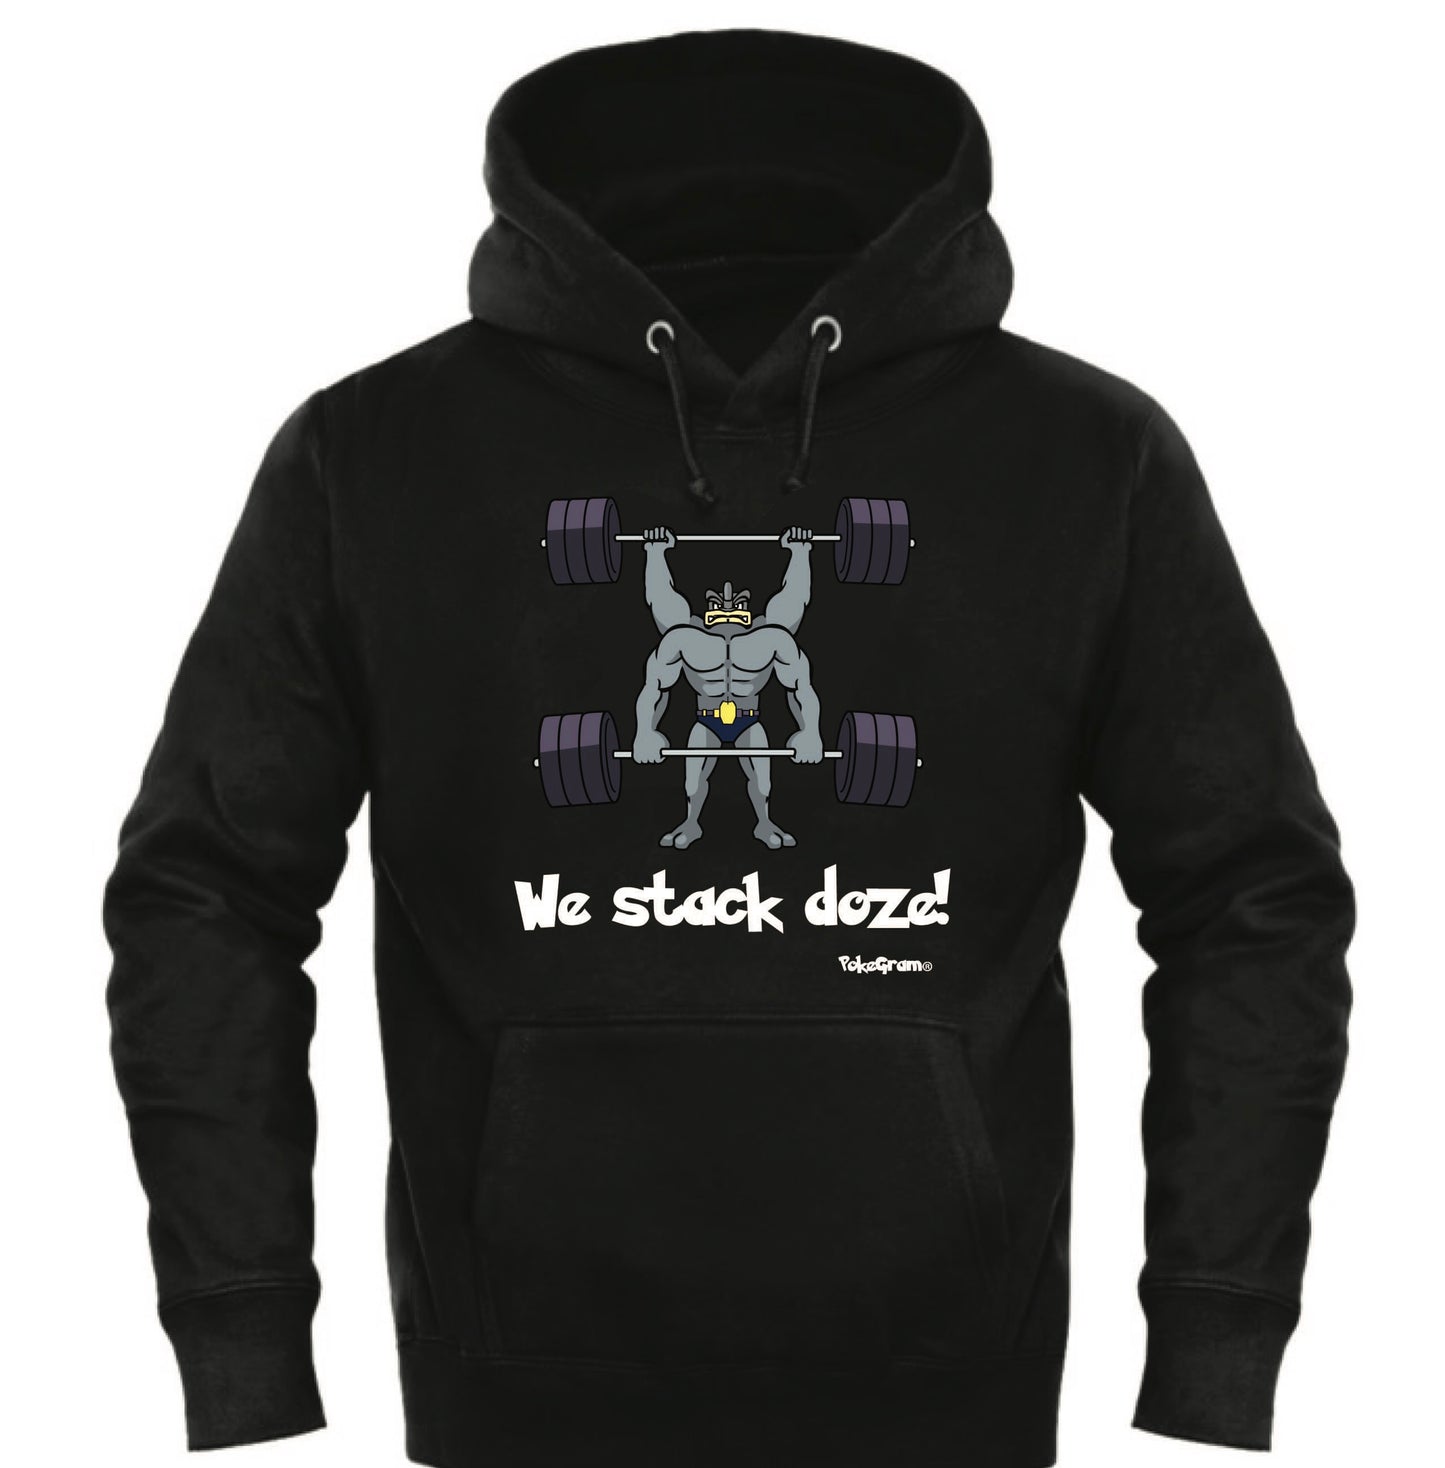 “We Stack Doze!” Hoodie - Black